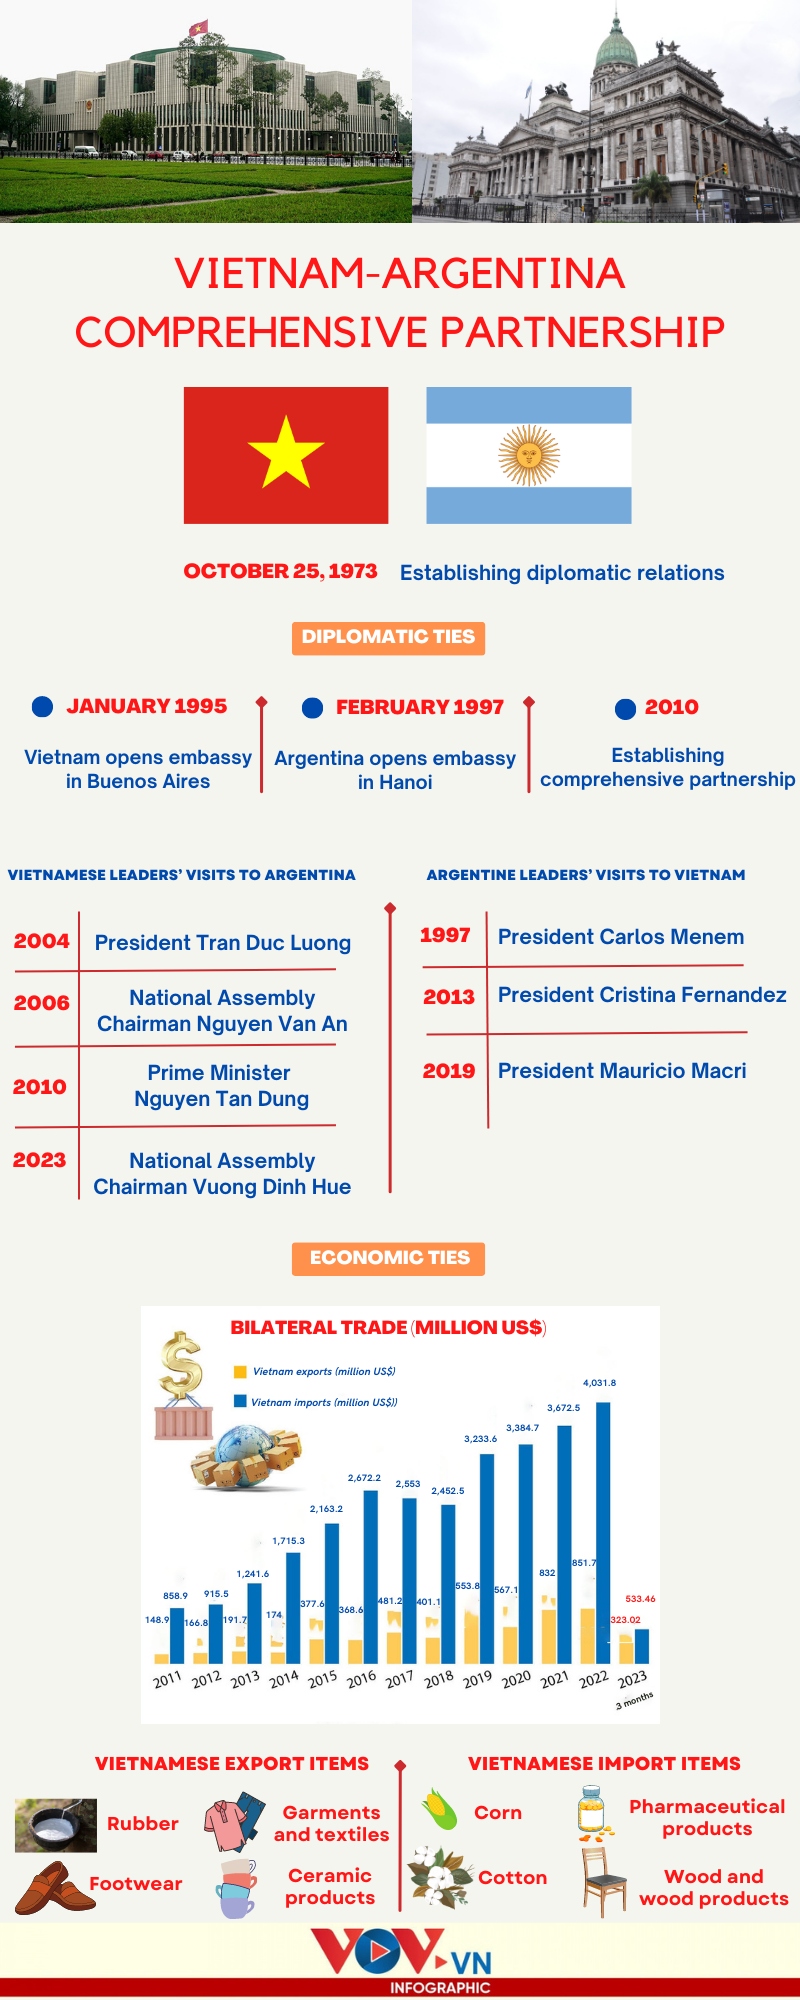 a glance at vietnam-argentina comprehensive partnership picture 1